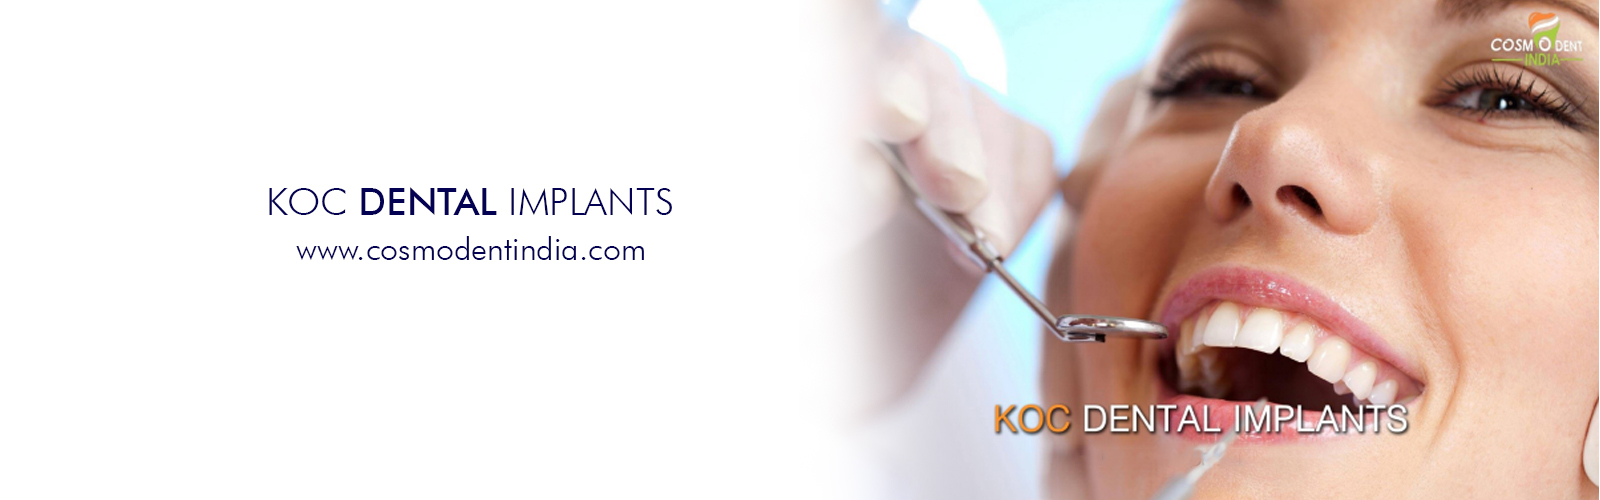 koc-implants